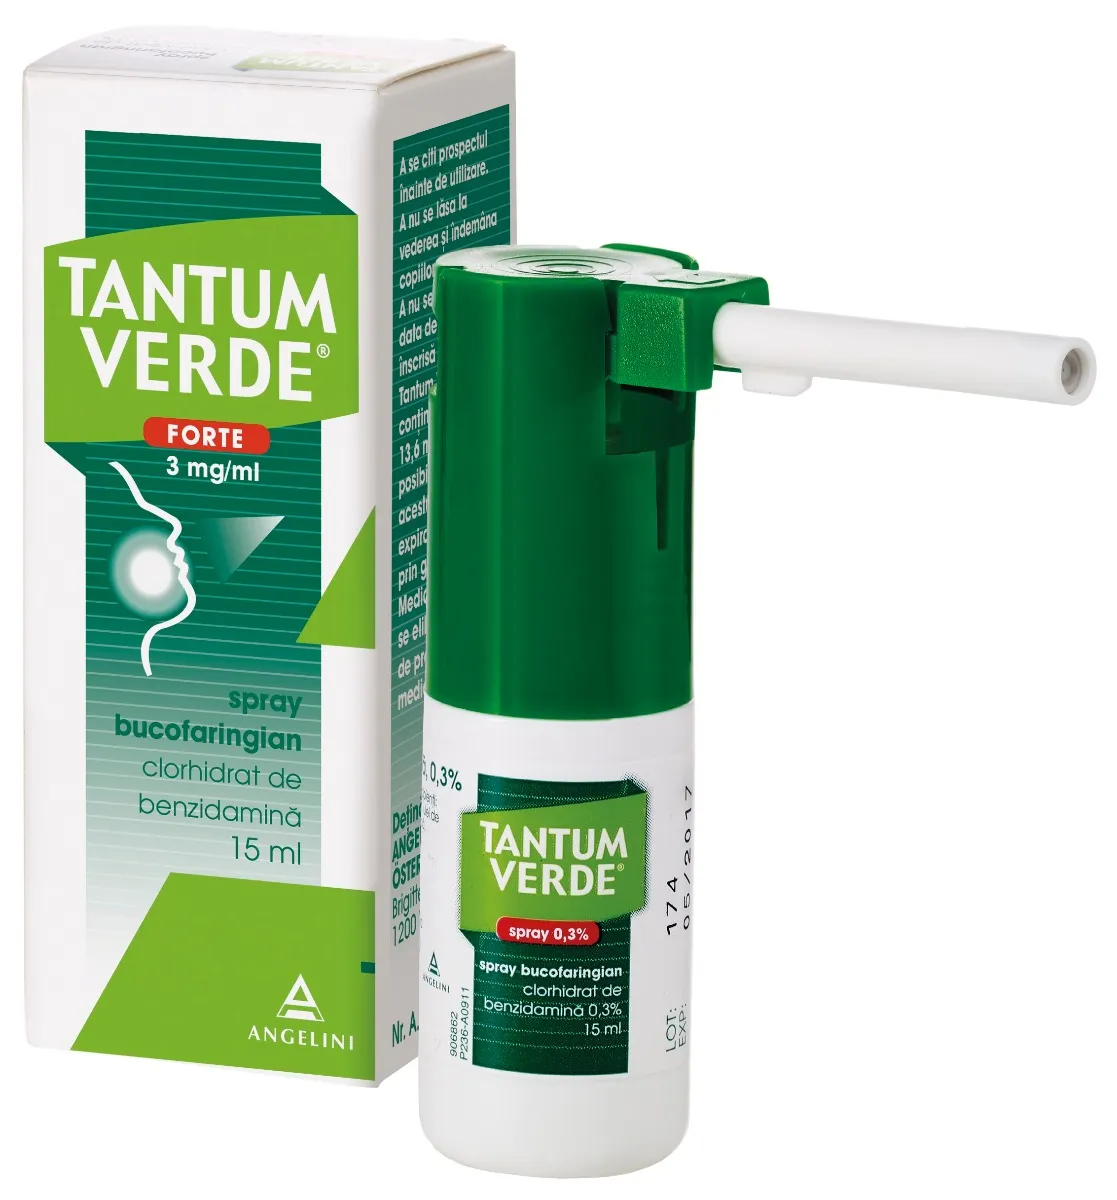 Tantum verde Forte spray 3 mg/ml, 15ml, Angelini 